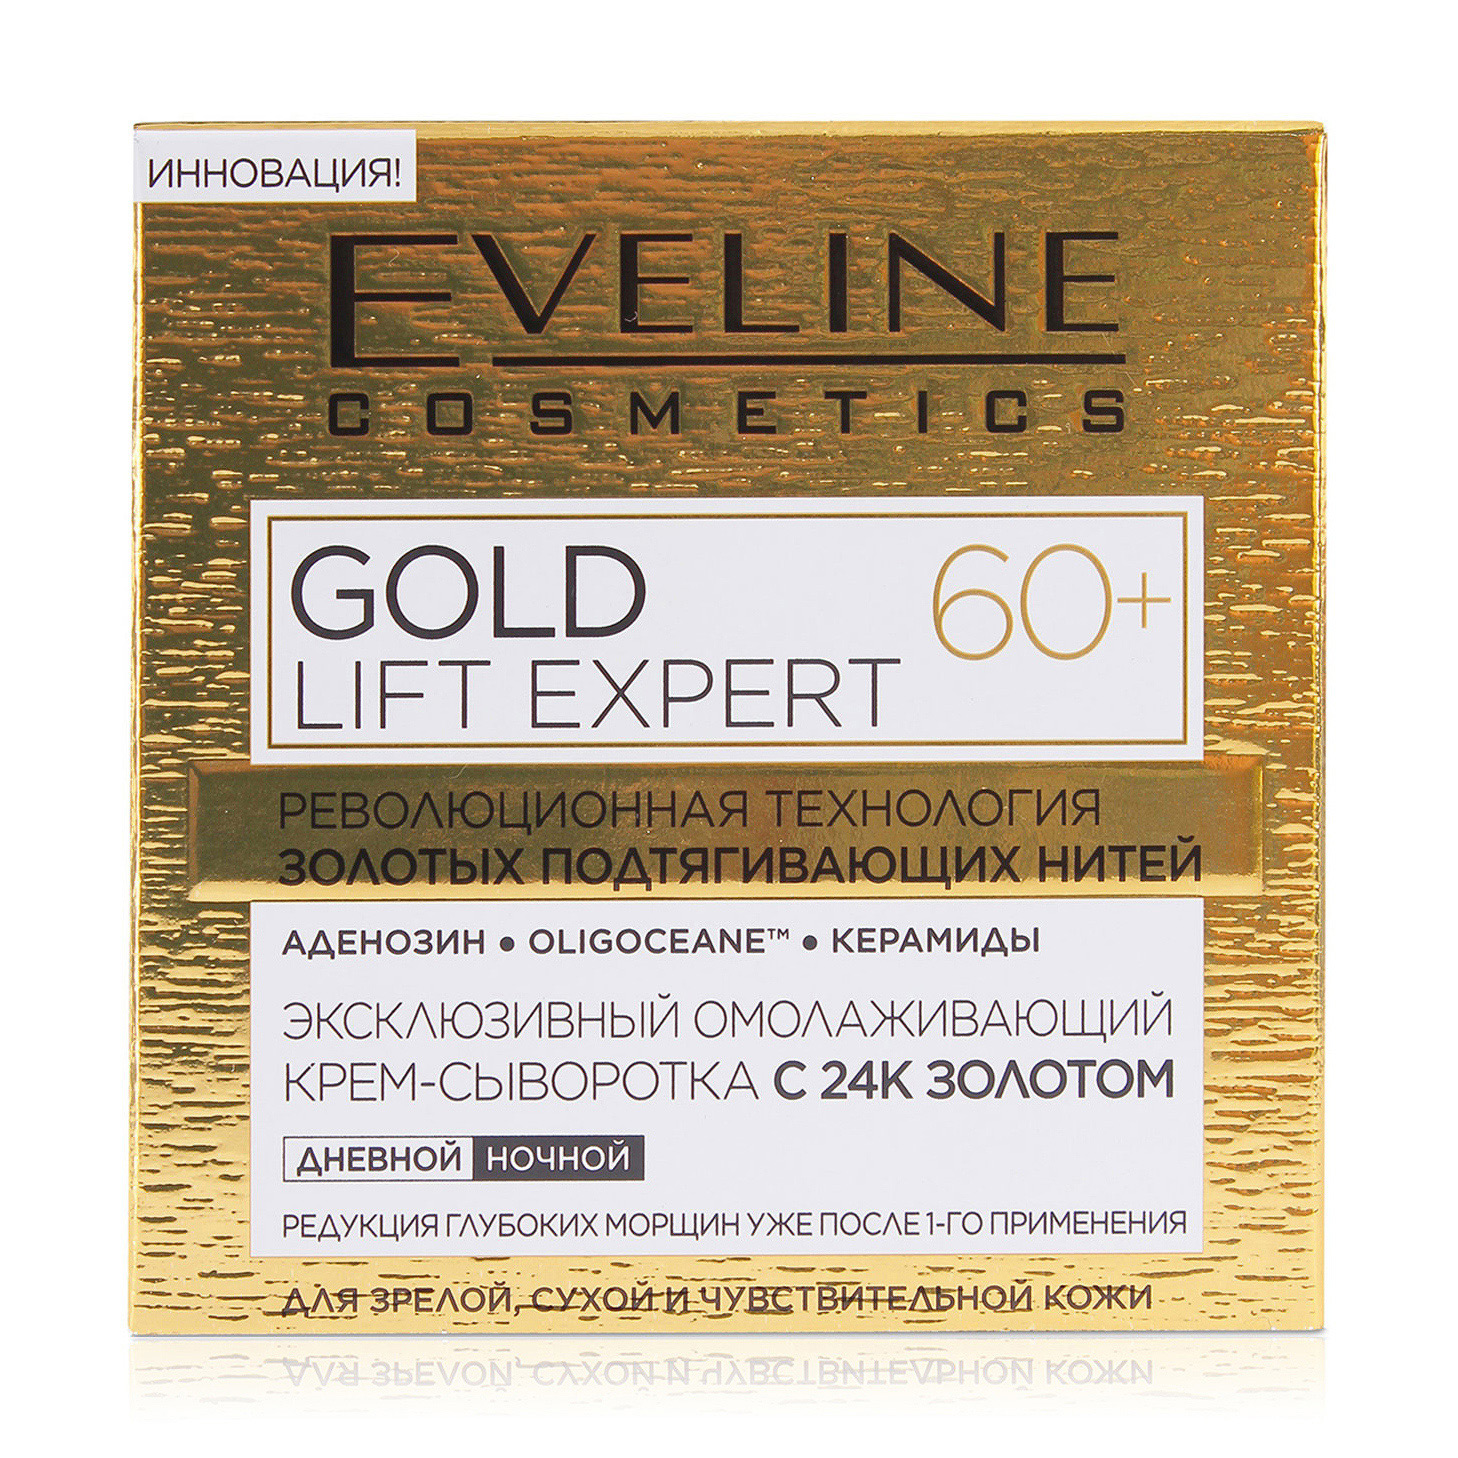 Gold lift. Крем для лица Эвелин 60+ 24 кголд. Eveline косметика Gold Lift Expert. Gold Lift Expert 60+ крем-сыворотка, 50 мл. Eveline Cosmetics Gold Lift Expert 60+.